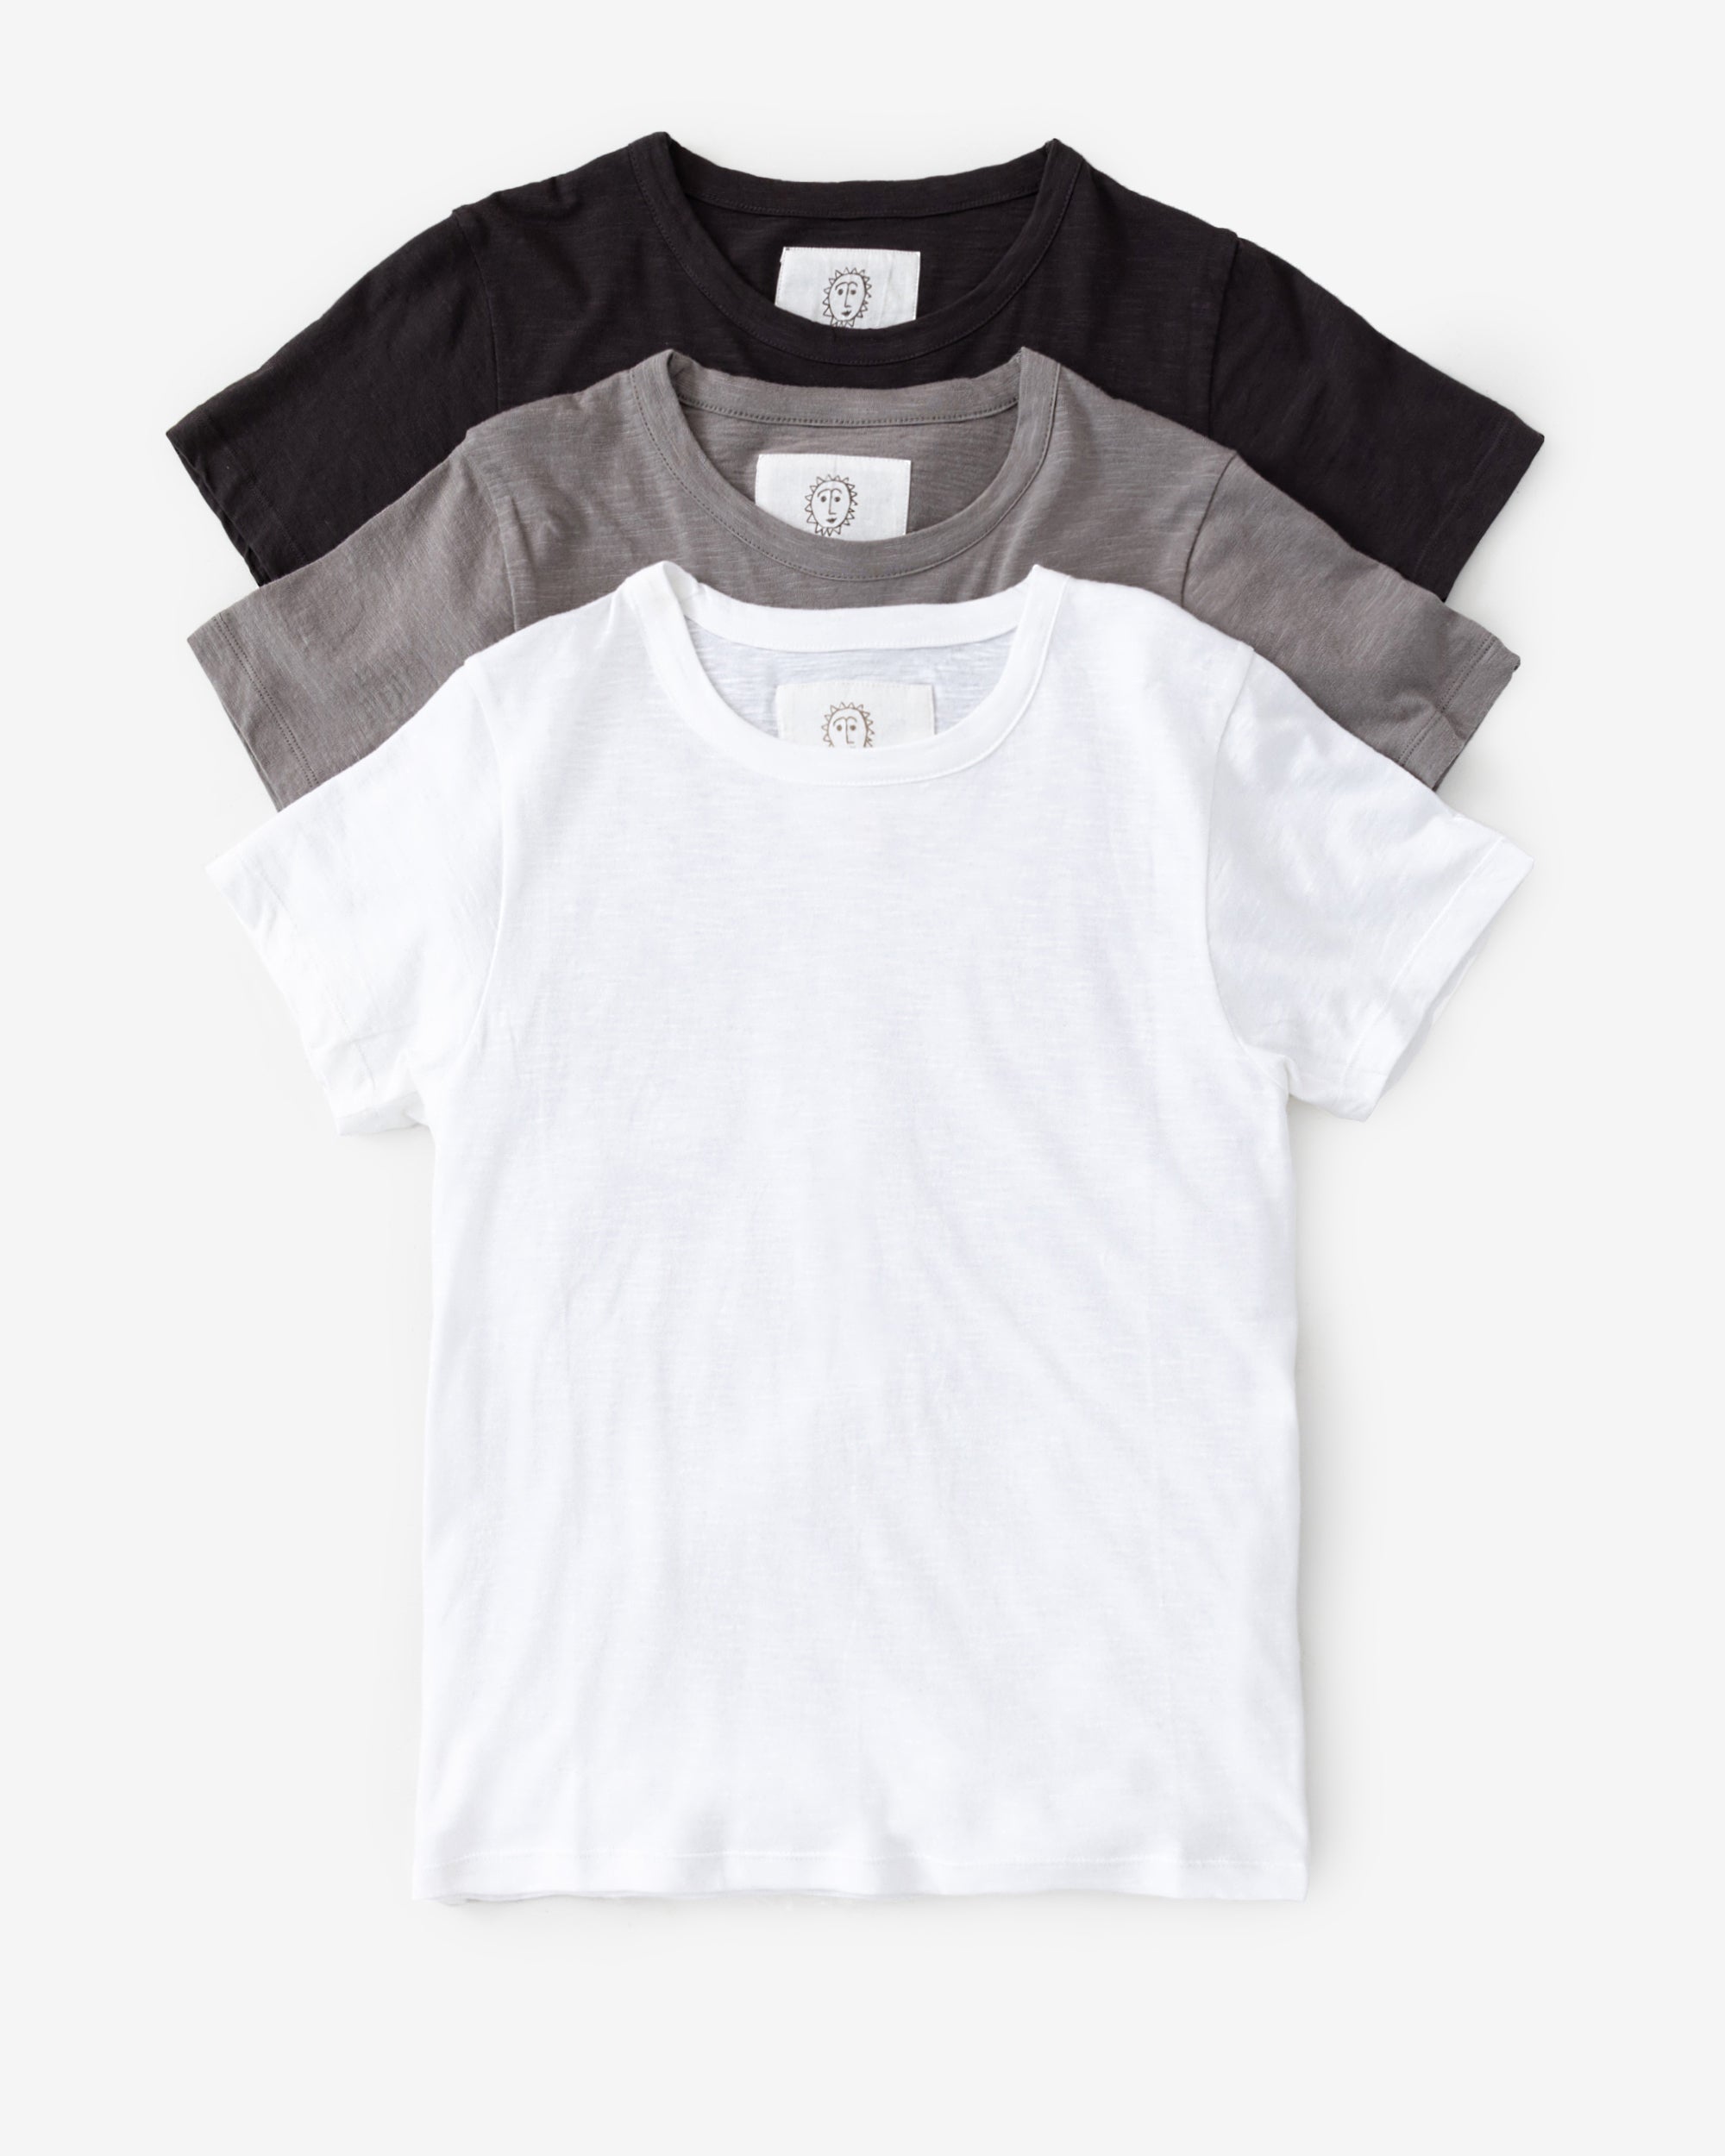 Saturday Tee - Knit T-Shirt 3-Pack - Black/Cloud/Pebble